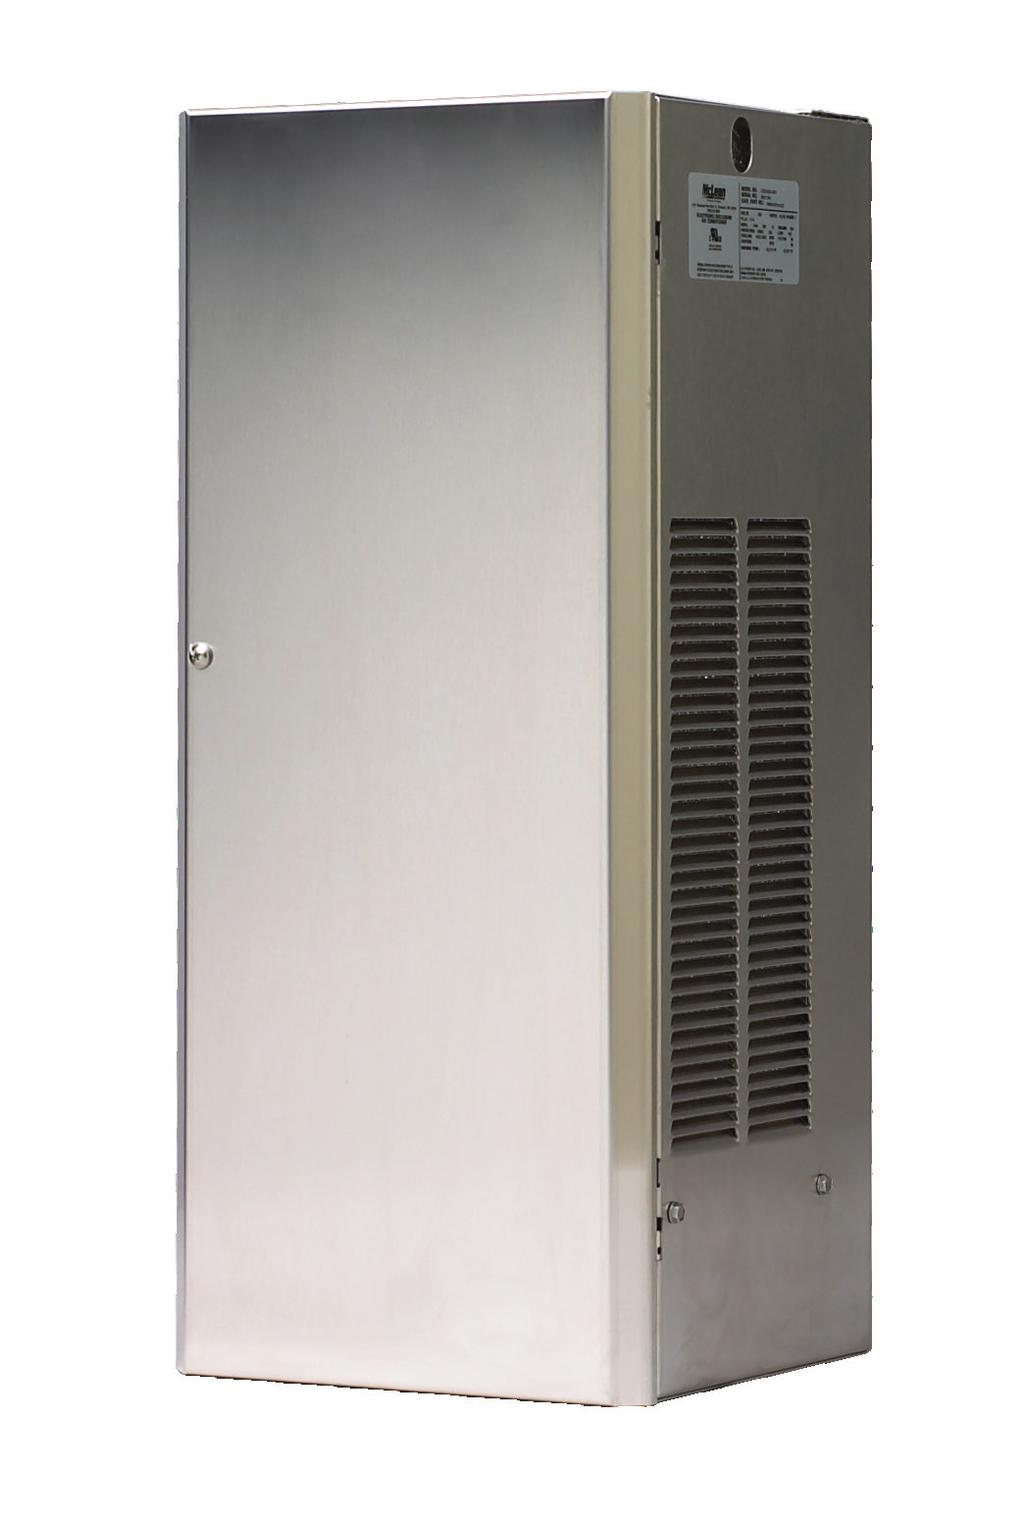 PROAIR Air Conditioner CR23 Model INSTRUCTION MANUAL Rev.